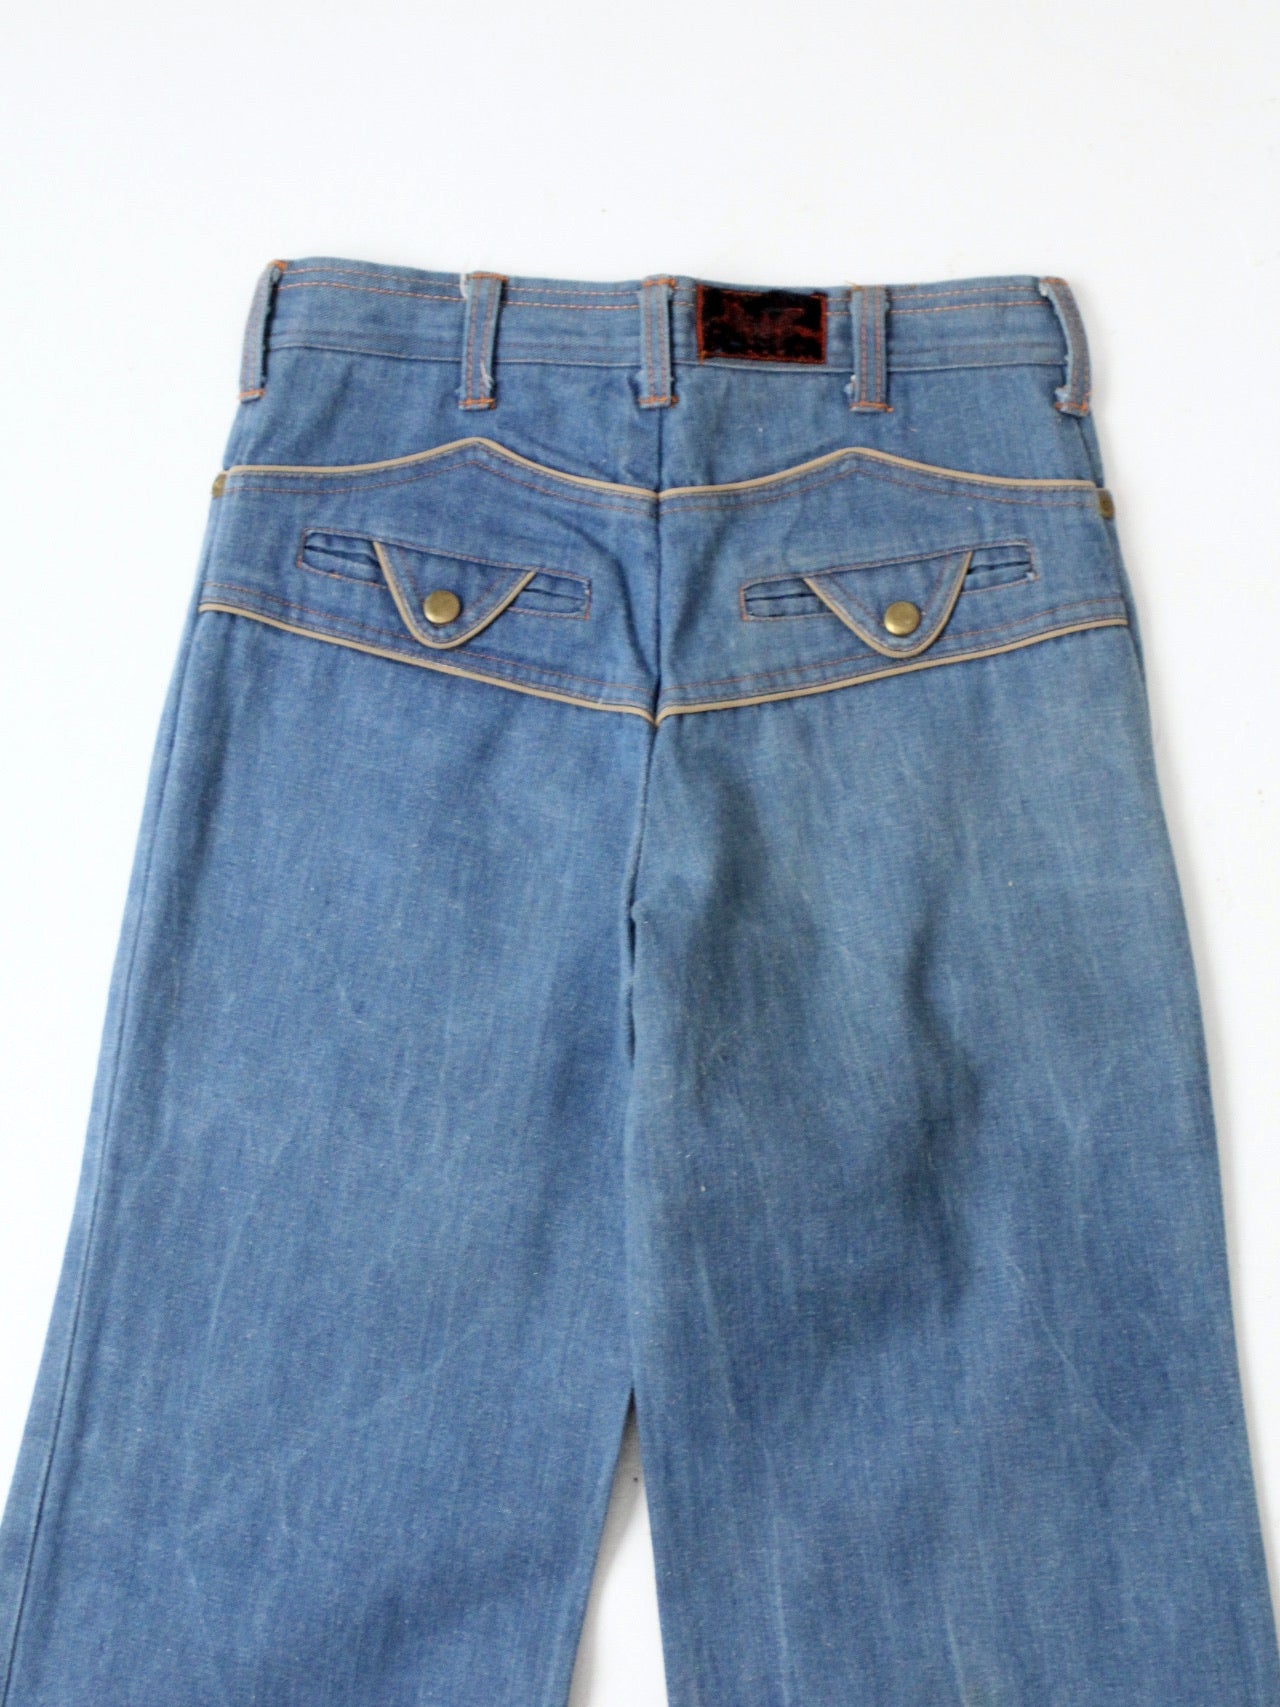 vintage 70s Liberty Americana flare leg jeans 27 x 34